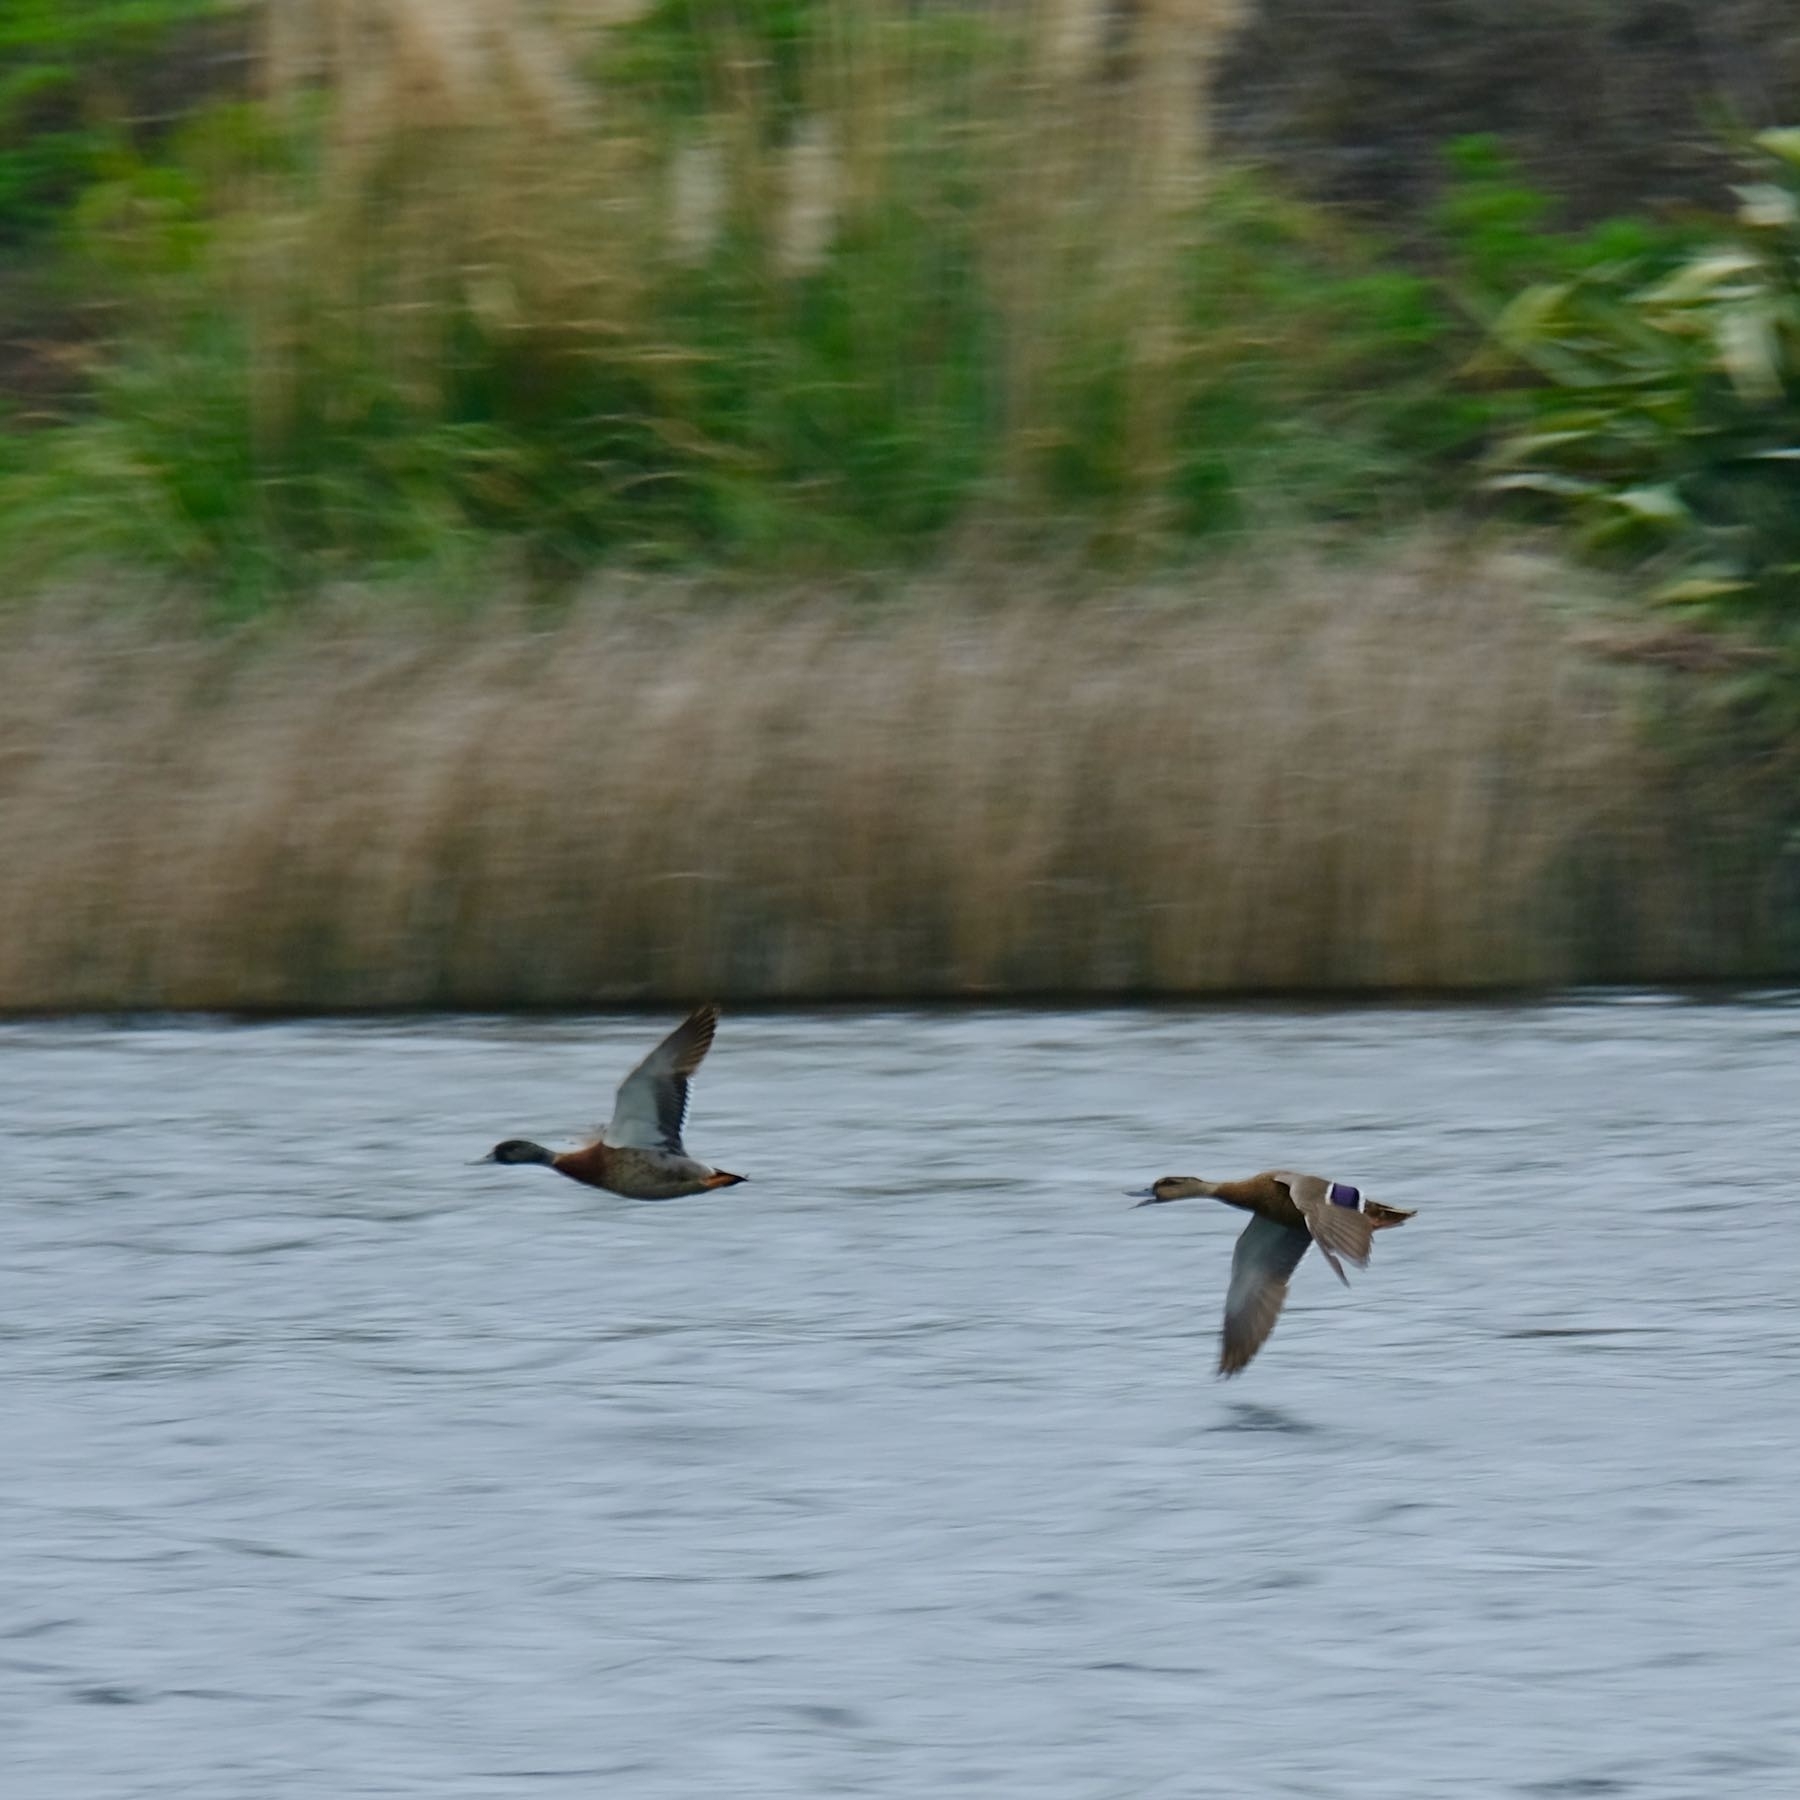 Two mallard ducks in flight just above a lake. 